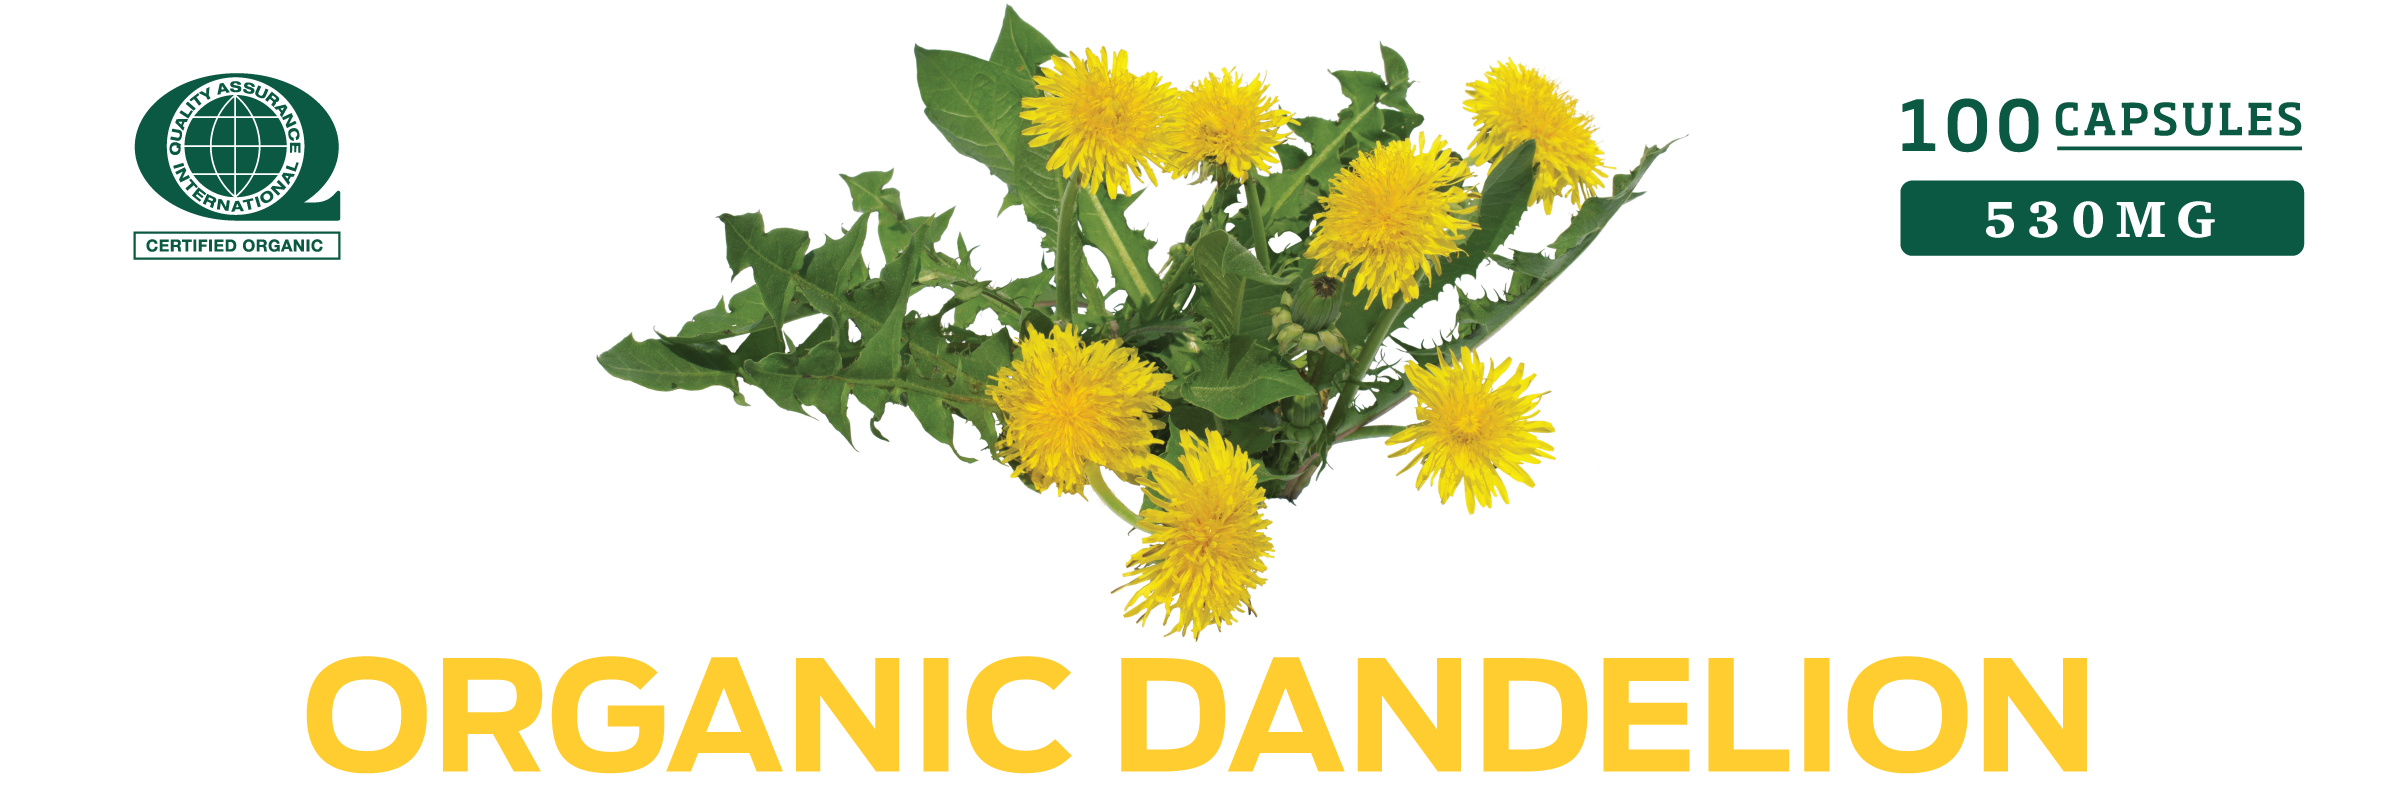 Organic Dandelion Vitamins and Supplements